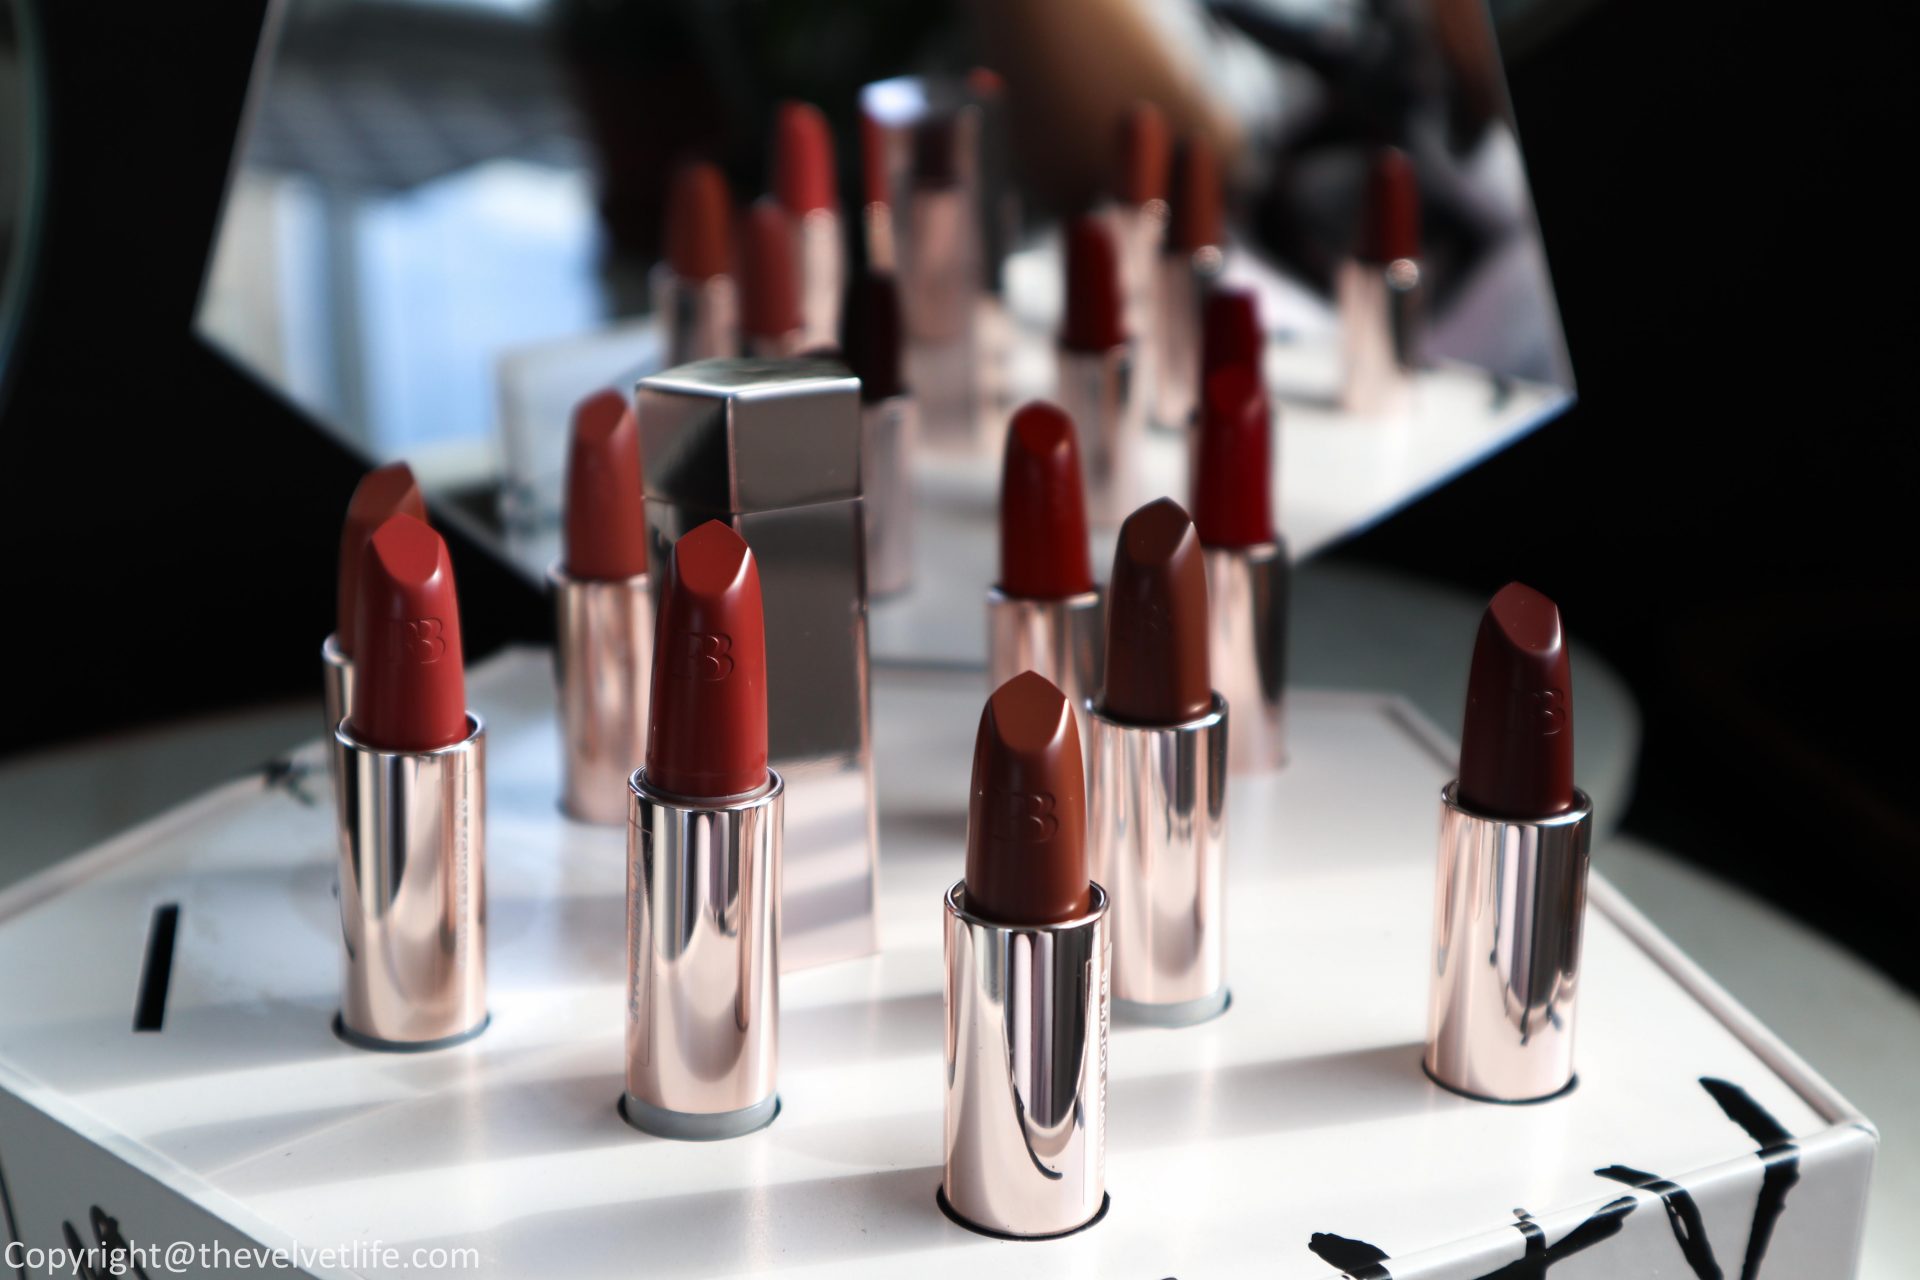 We Tried It: Rihanna's Fenty Icon Lipstick Review